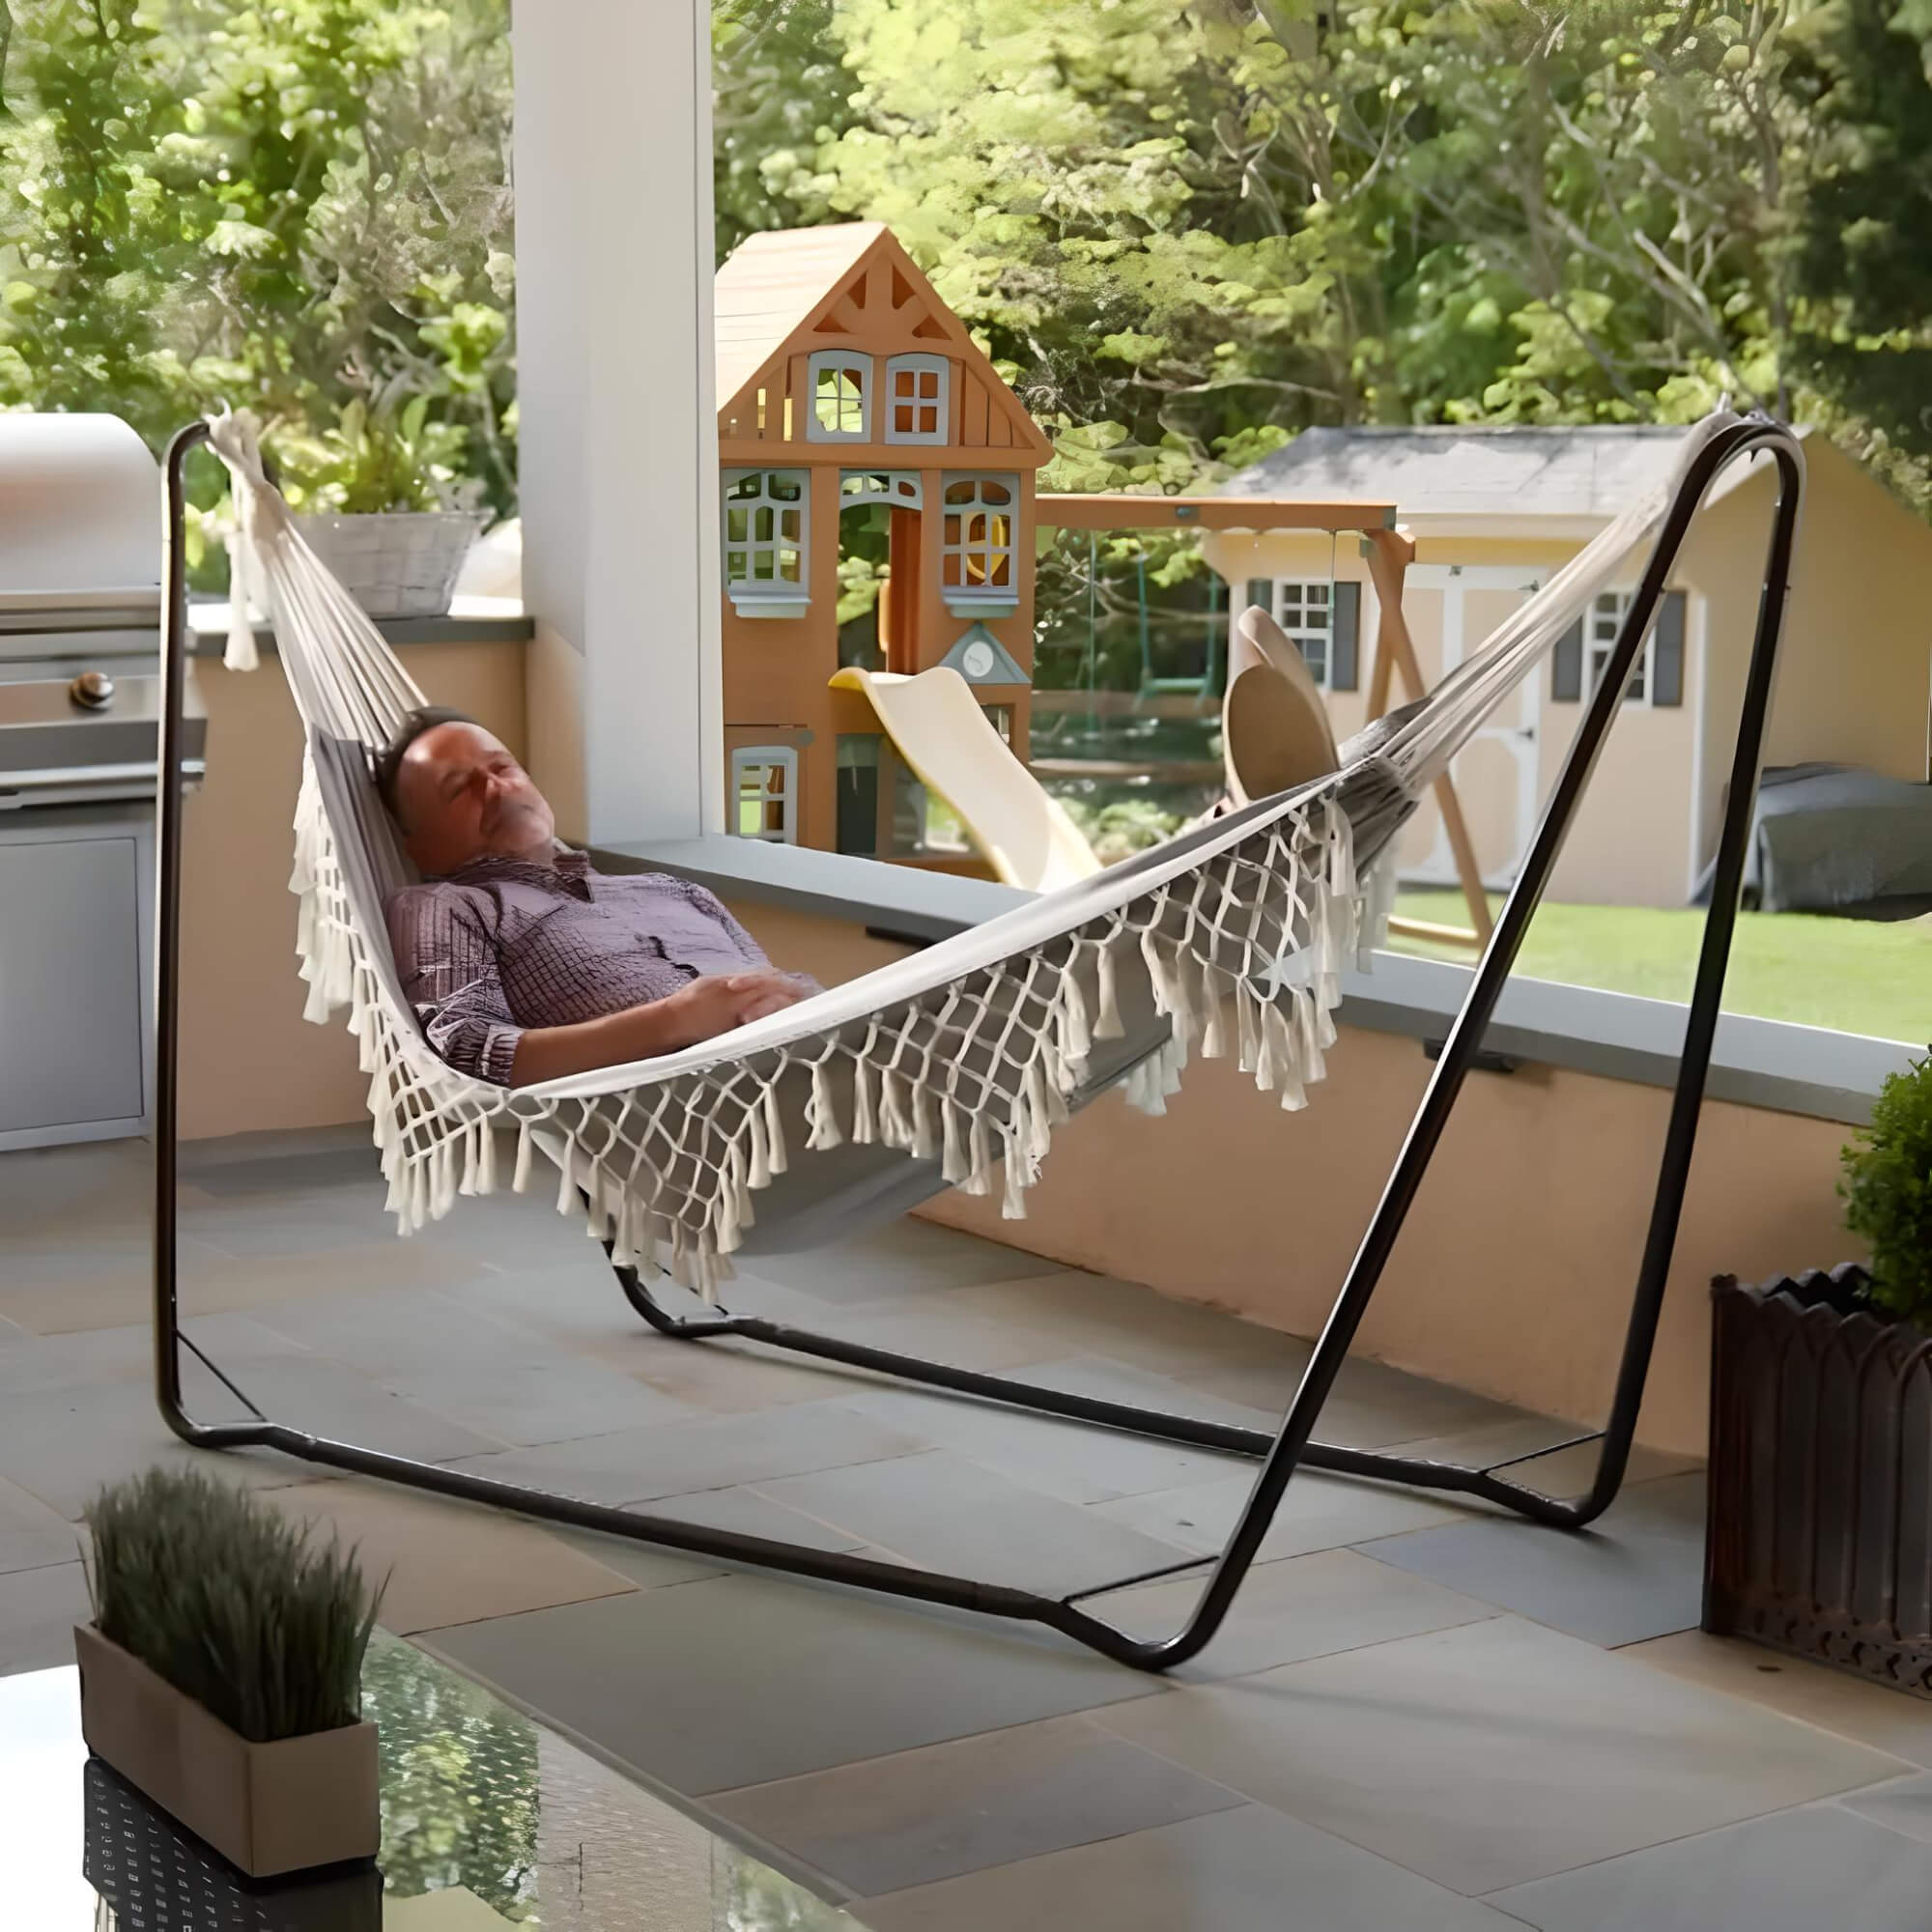 men-sleeping-portable-hammock-stand